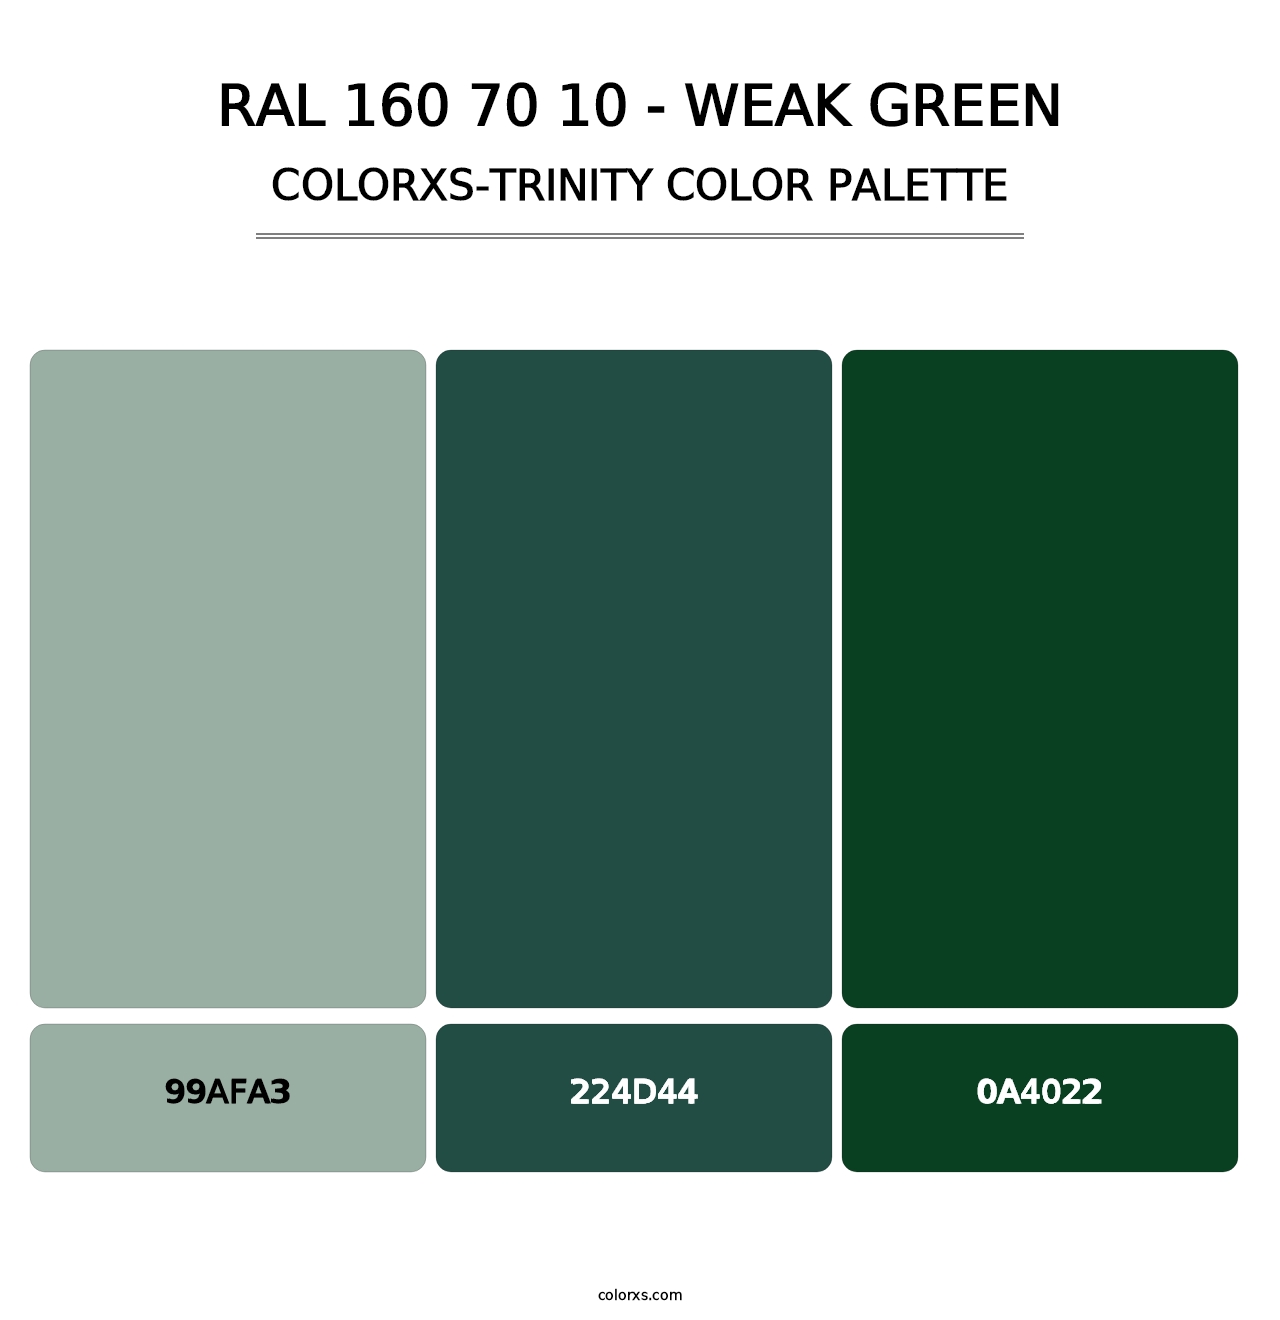 RAL 160 70 10 - Weak Green - Colorxs Trinity Palette